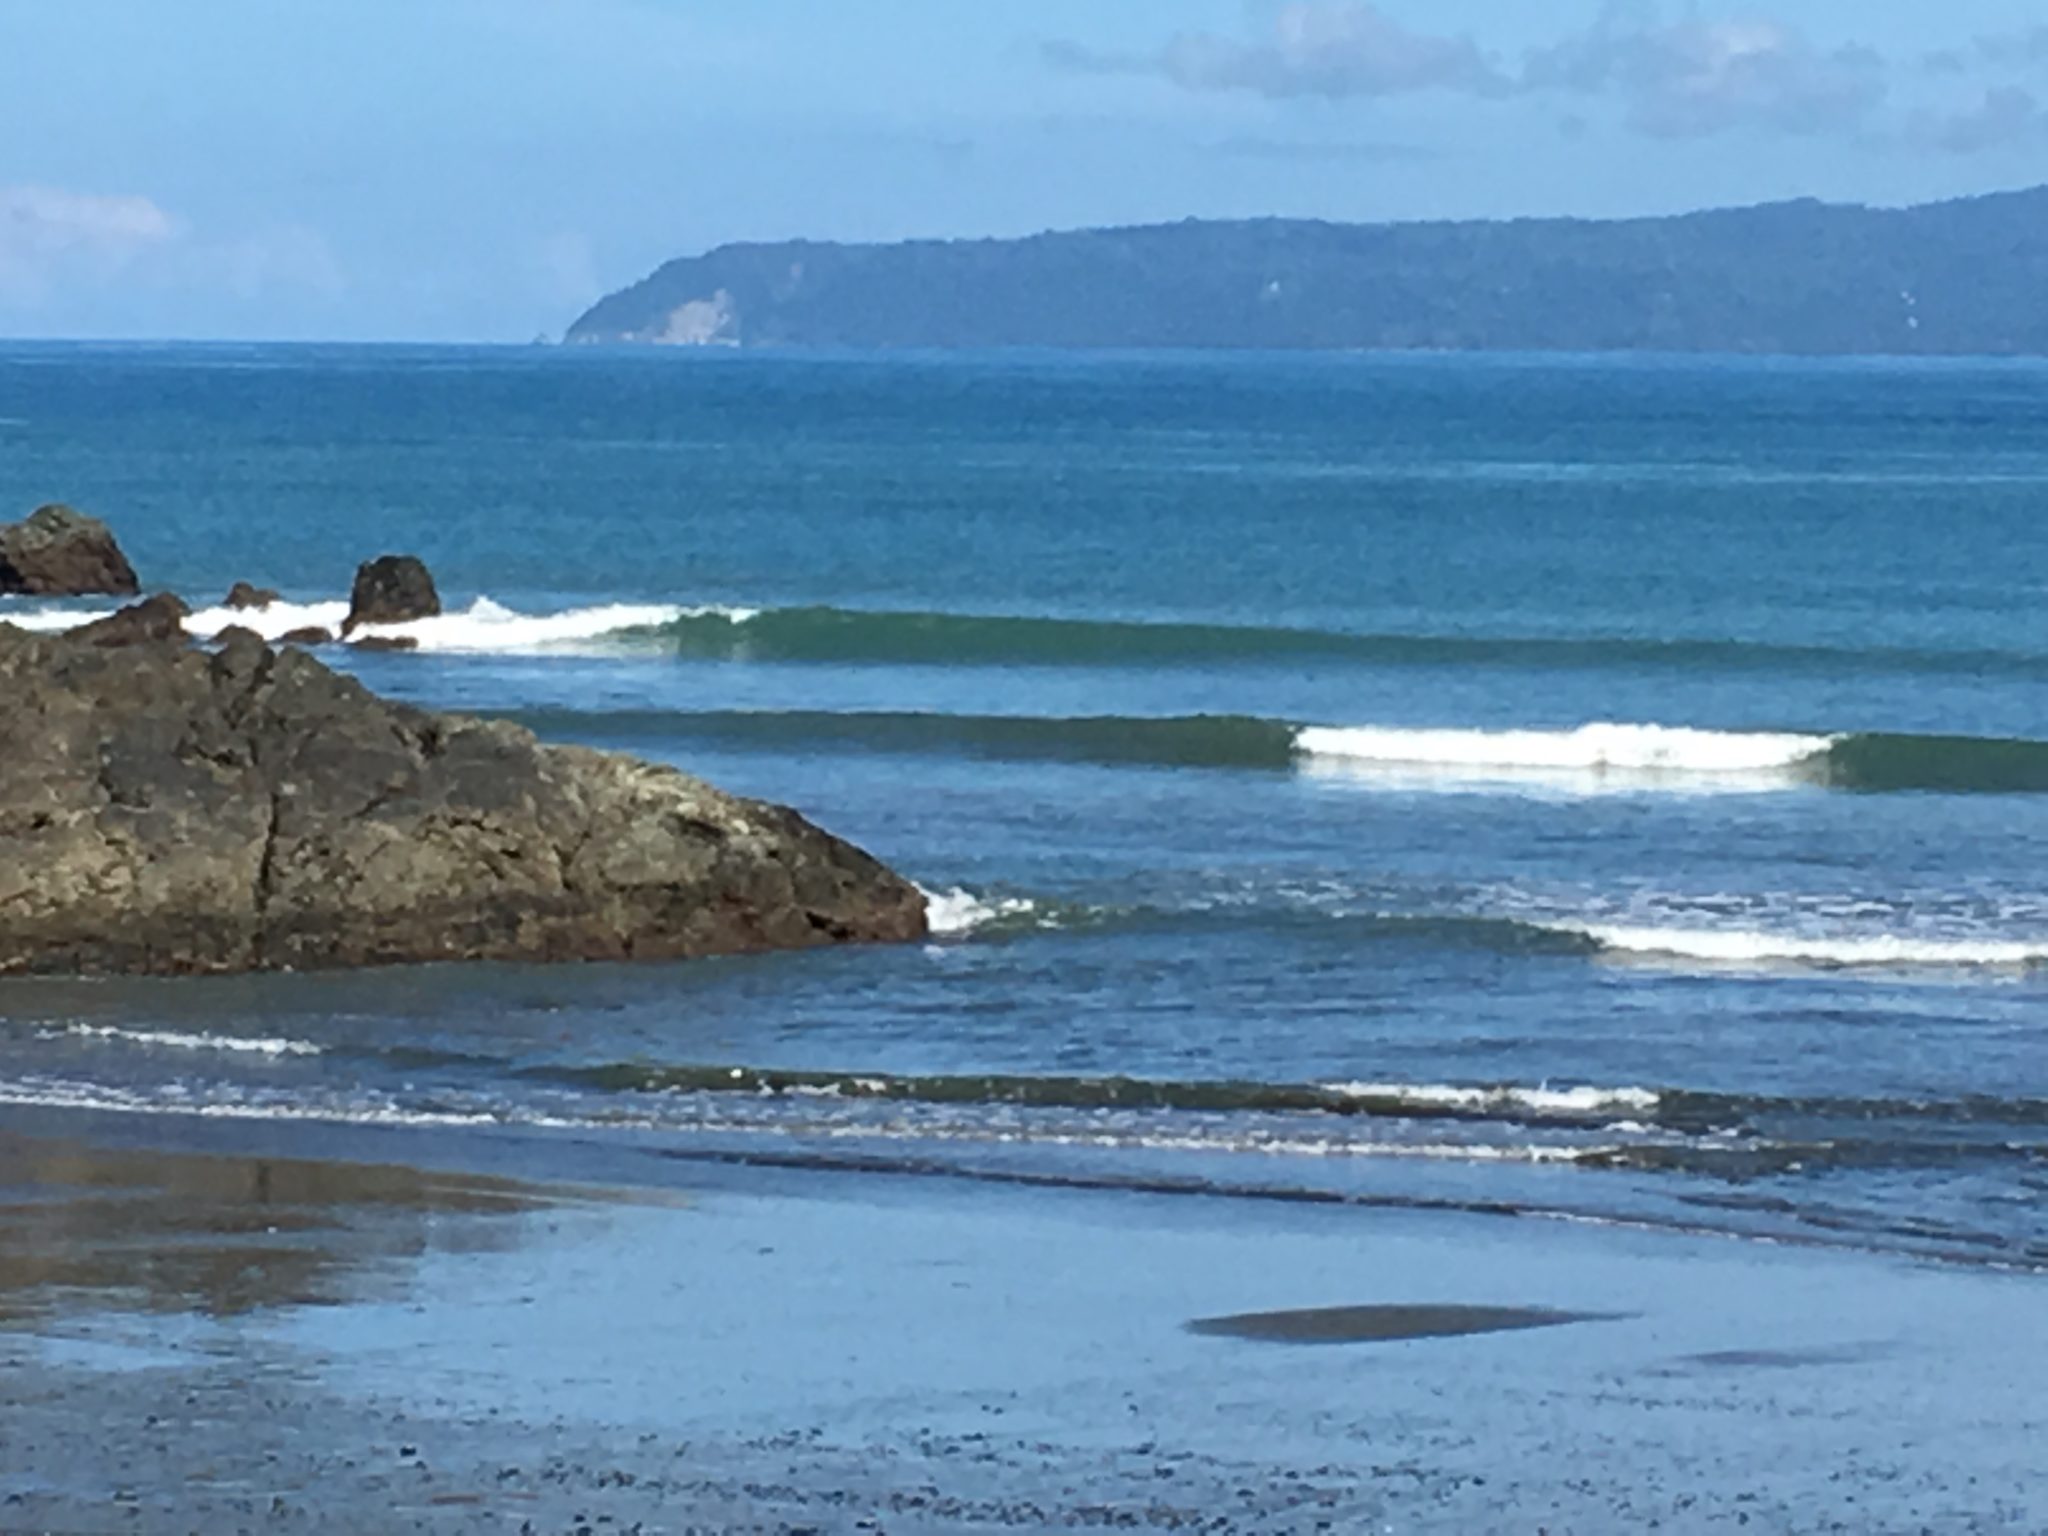 Pavones, Costa Rica Surf Report - July 6, 2016